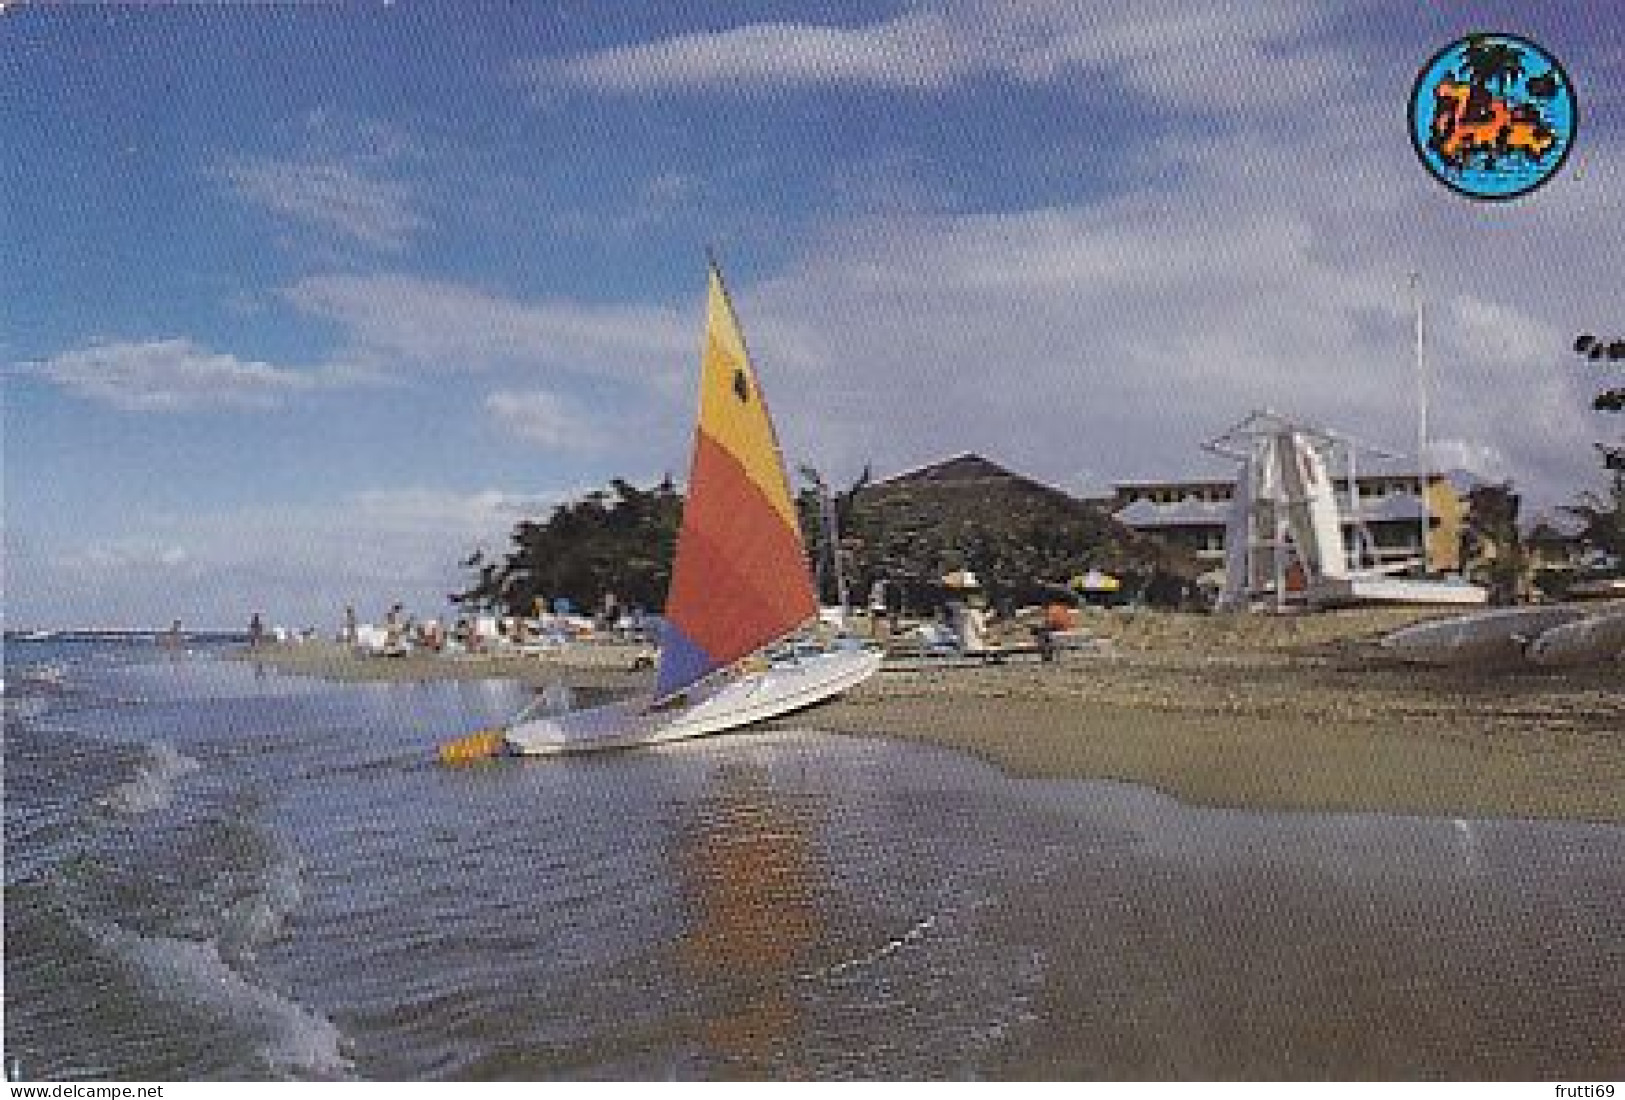 AK 165115 DOMINICAN REPUBLIC - Puerta Plata - Playa Dorada - Eurotel - Dominicaine (République)